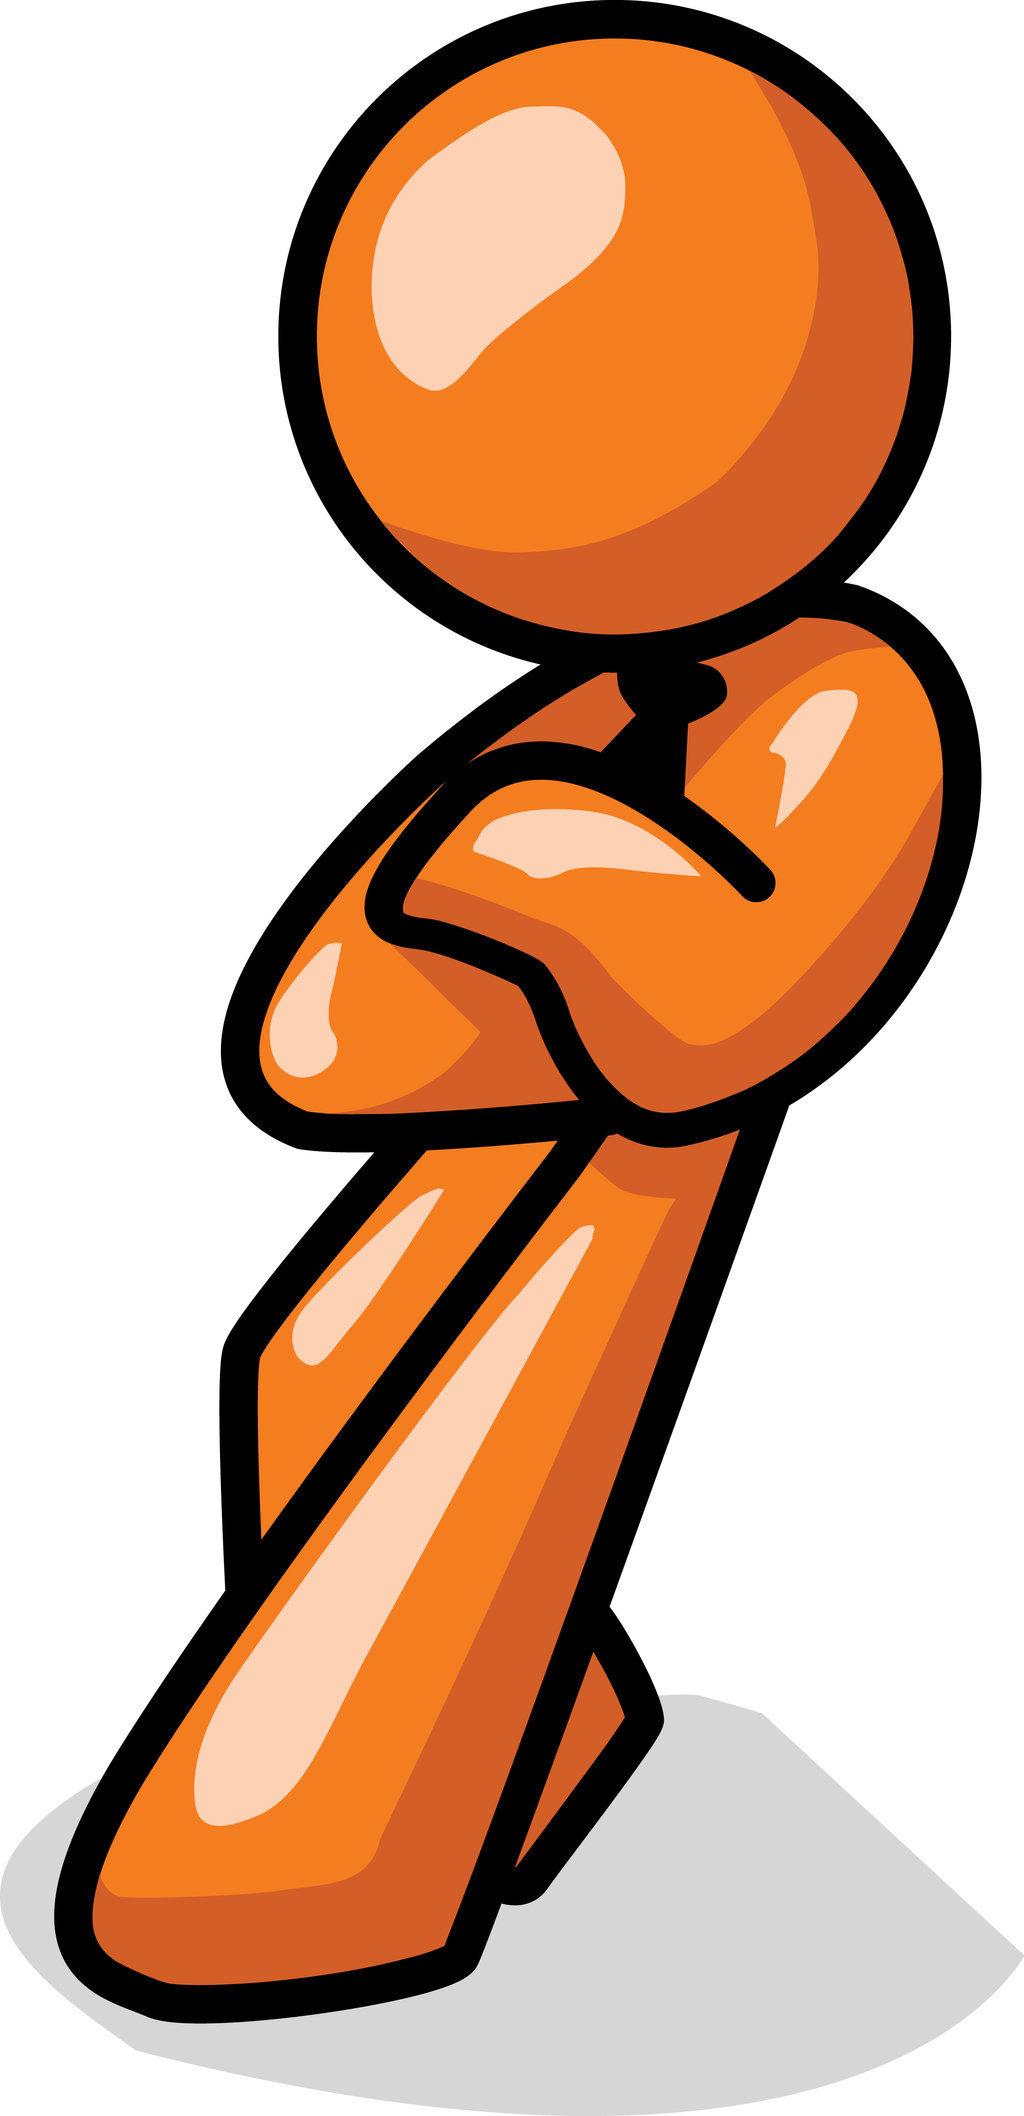 Orange Man by fulg3nt on deviantART